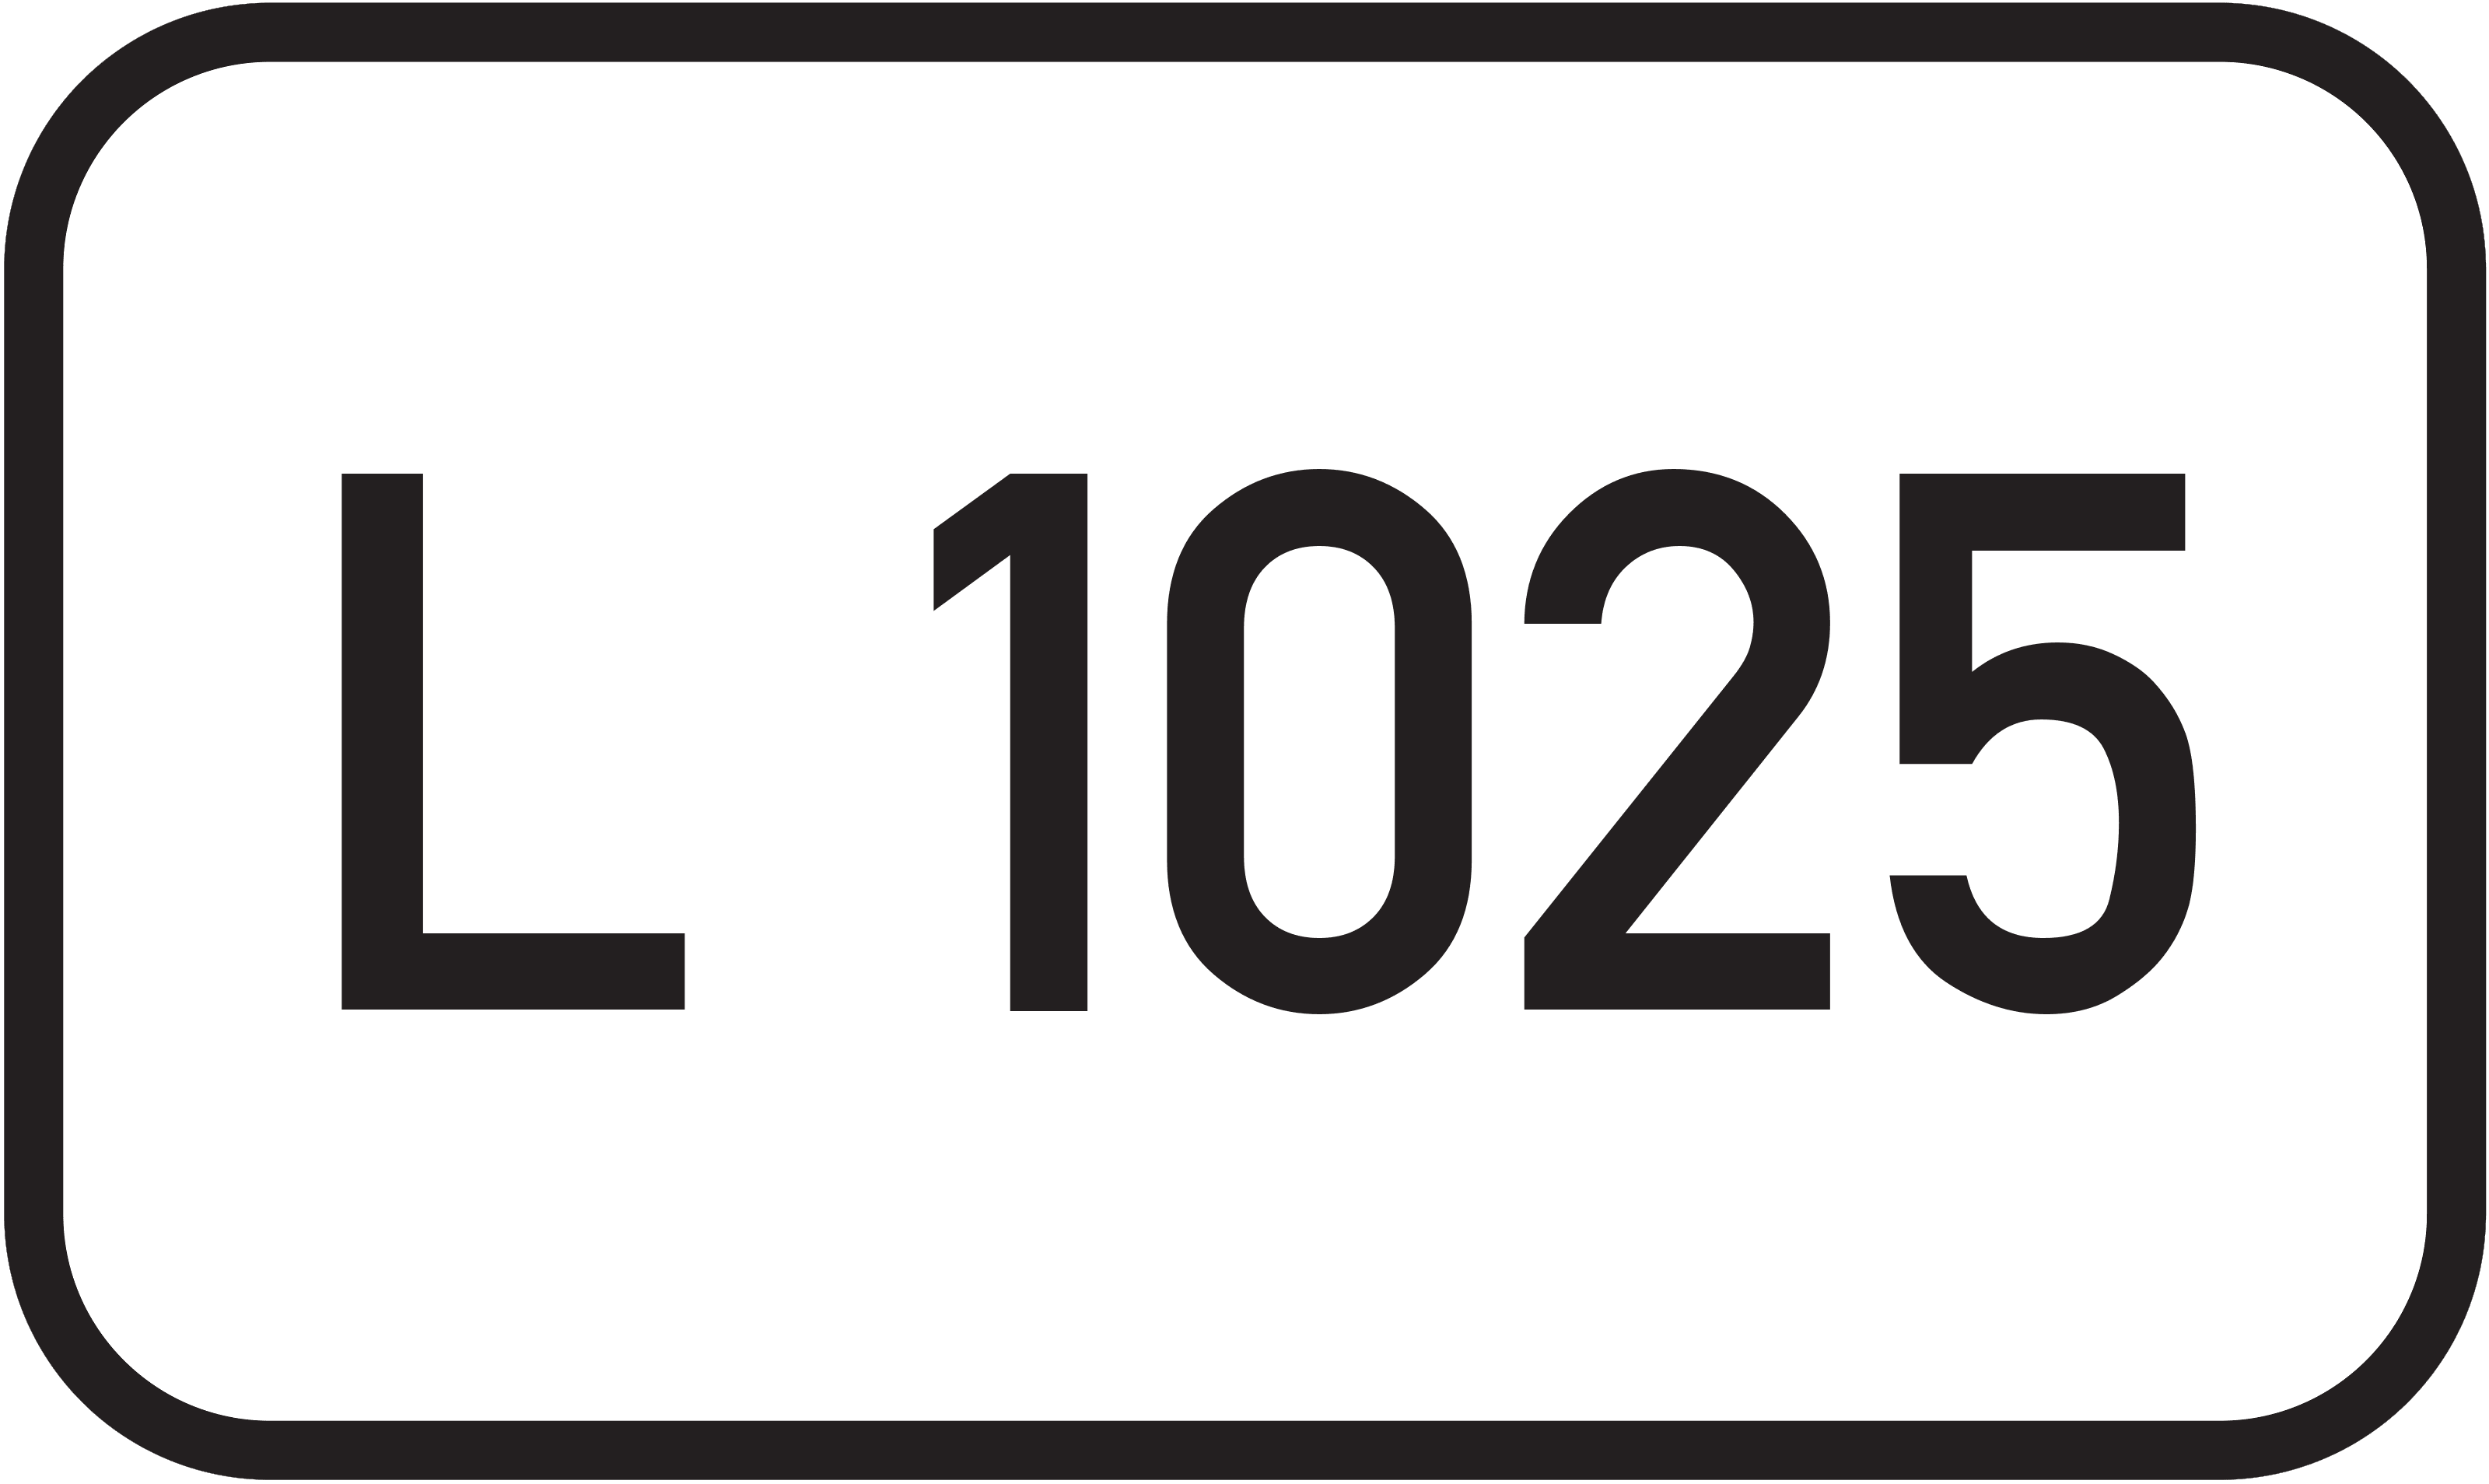 Straßenschild Landesstraße L 1025